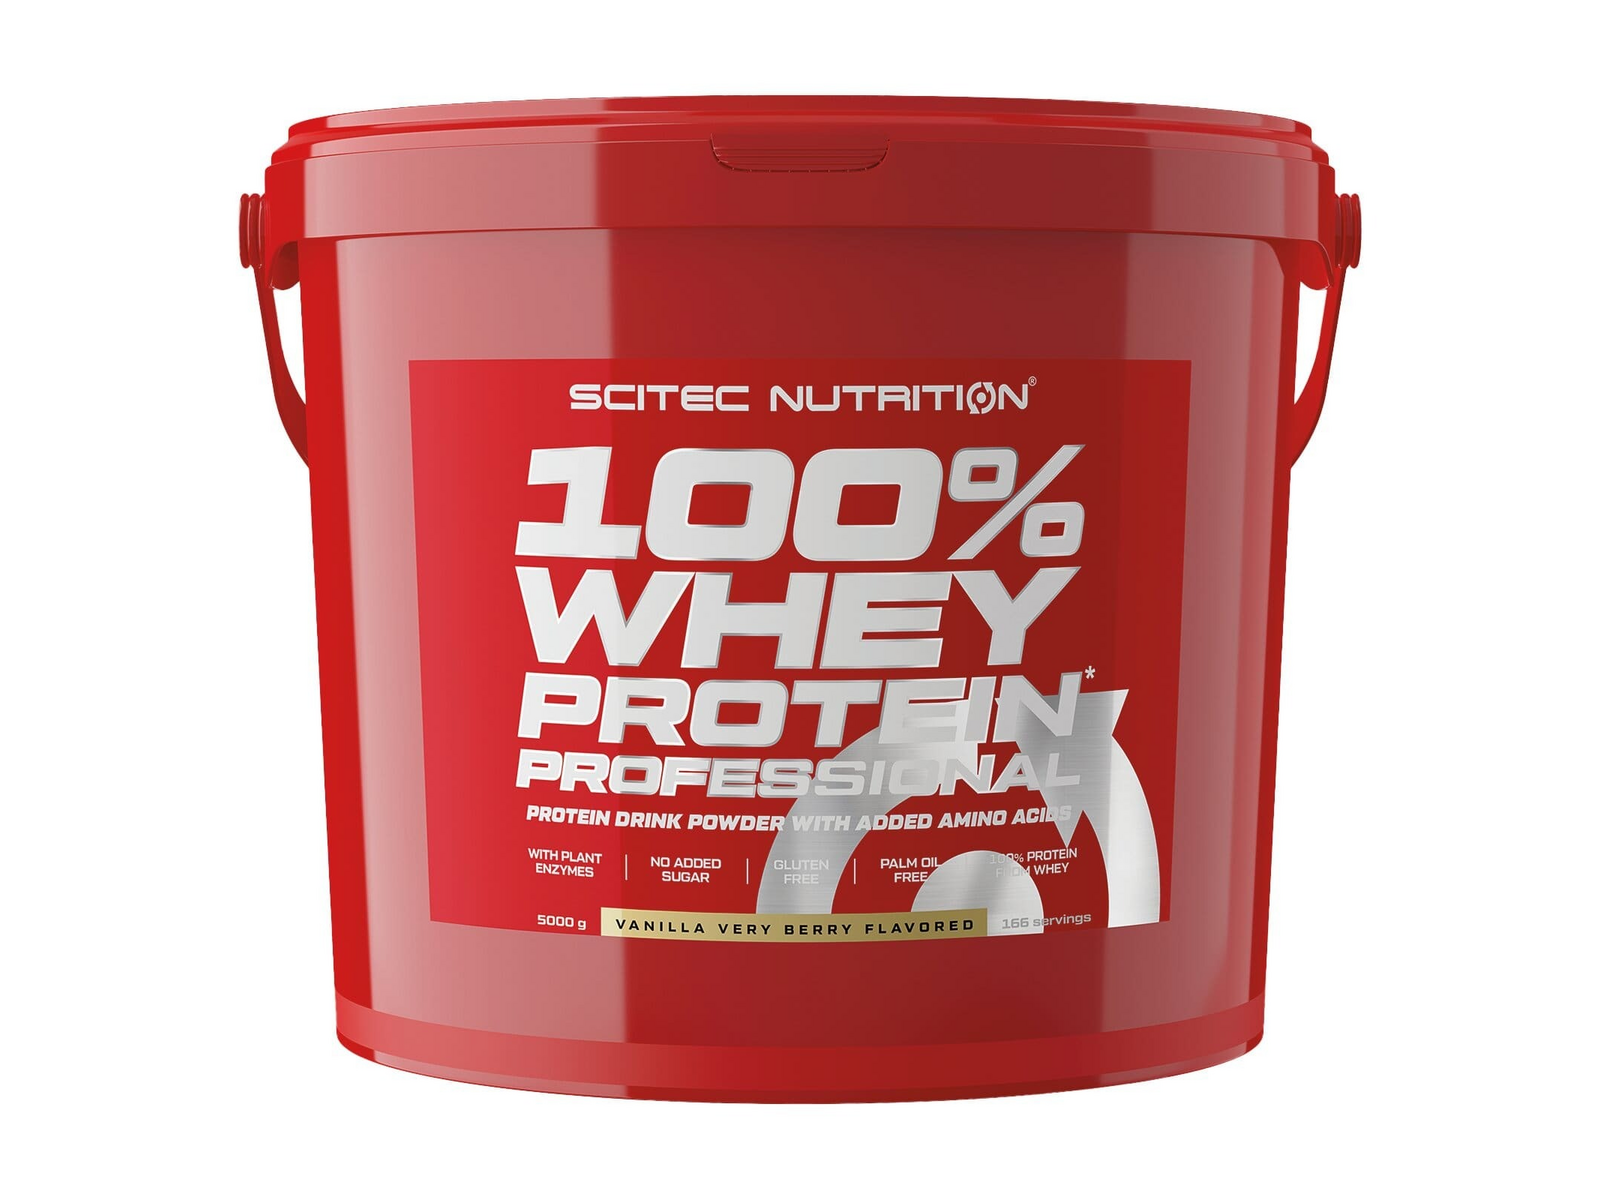 100% Whey Protein Professional (Vanilla/Very Berry - 5000 gram) - Scitec Nutrition - Eiwitpoeder - Eiwitshake